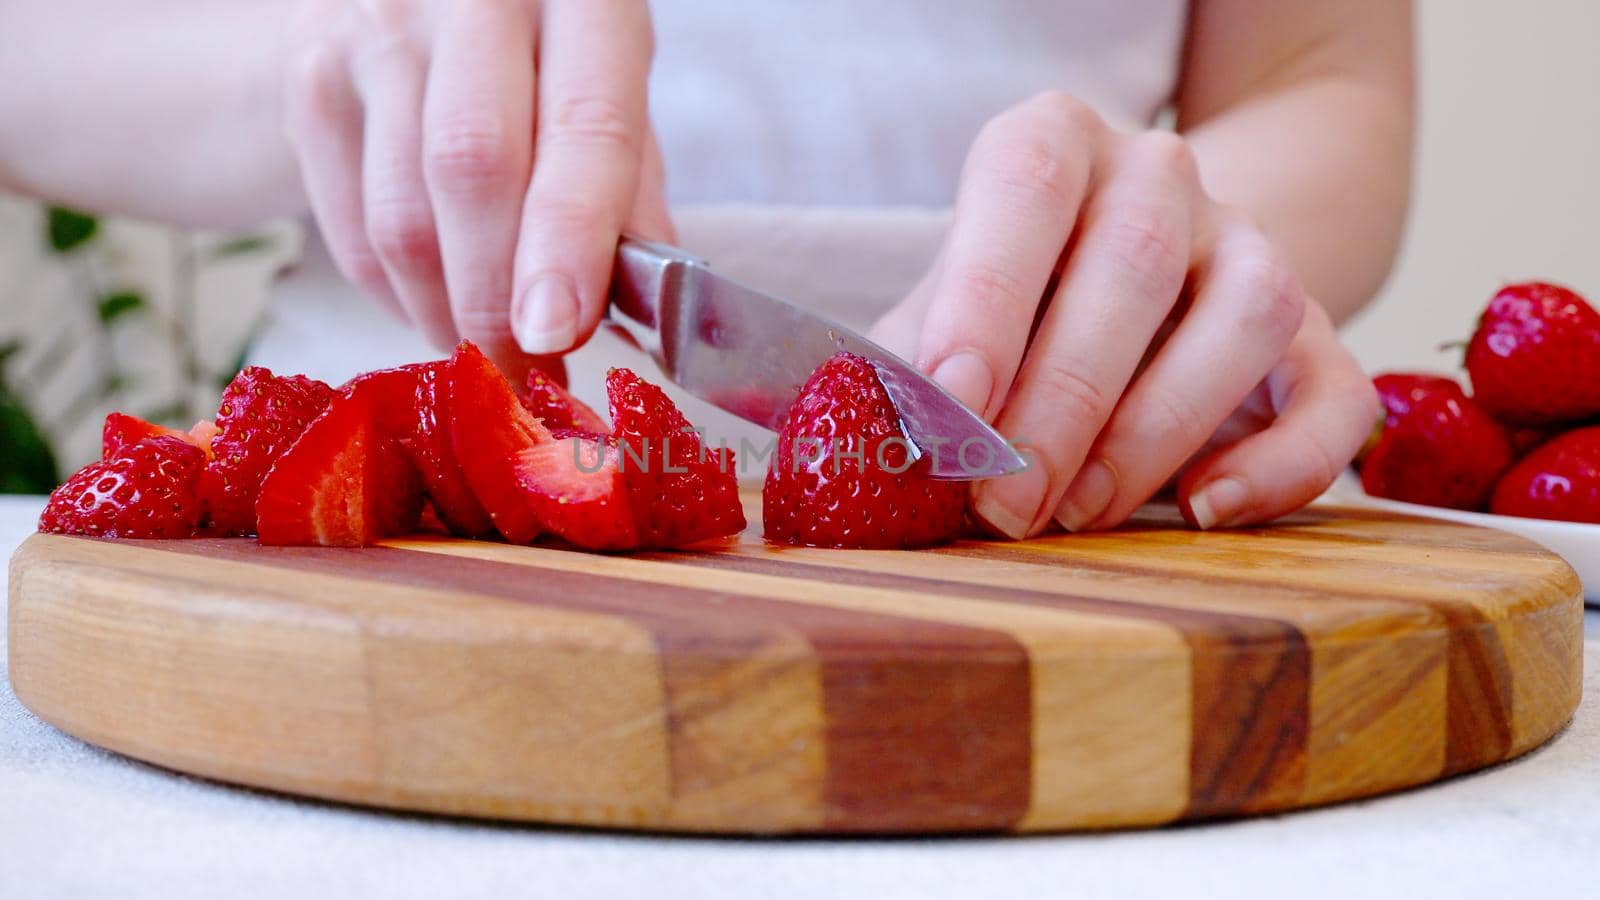 Woman cutting strawberrys on wooden board and preparing smoothie or milkshake by Svetlana_Belozerova